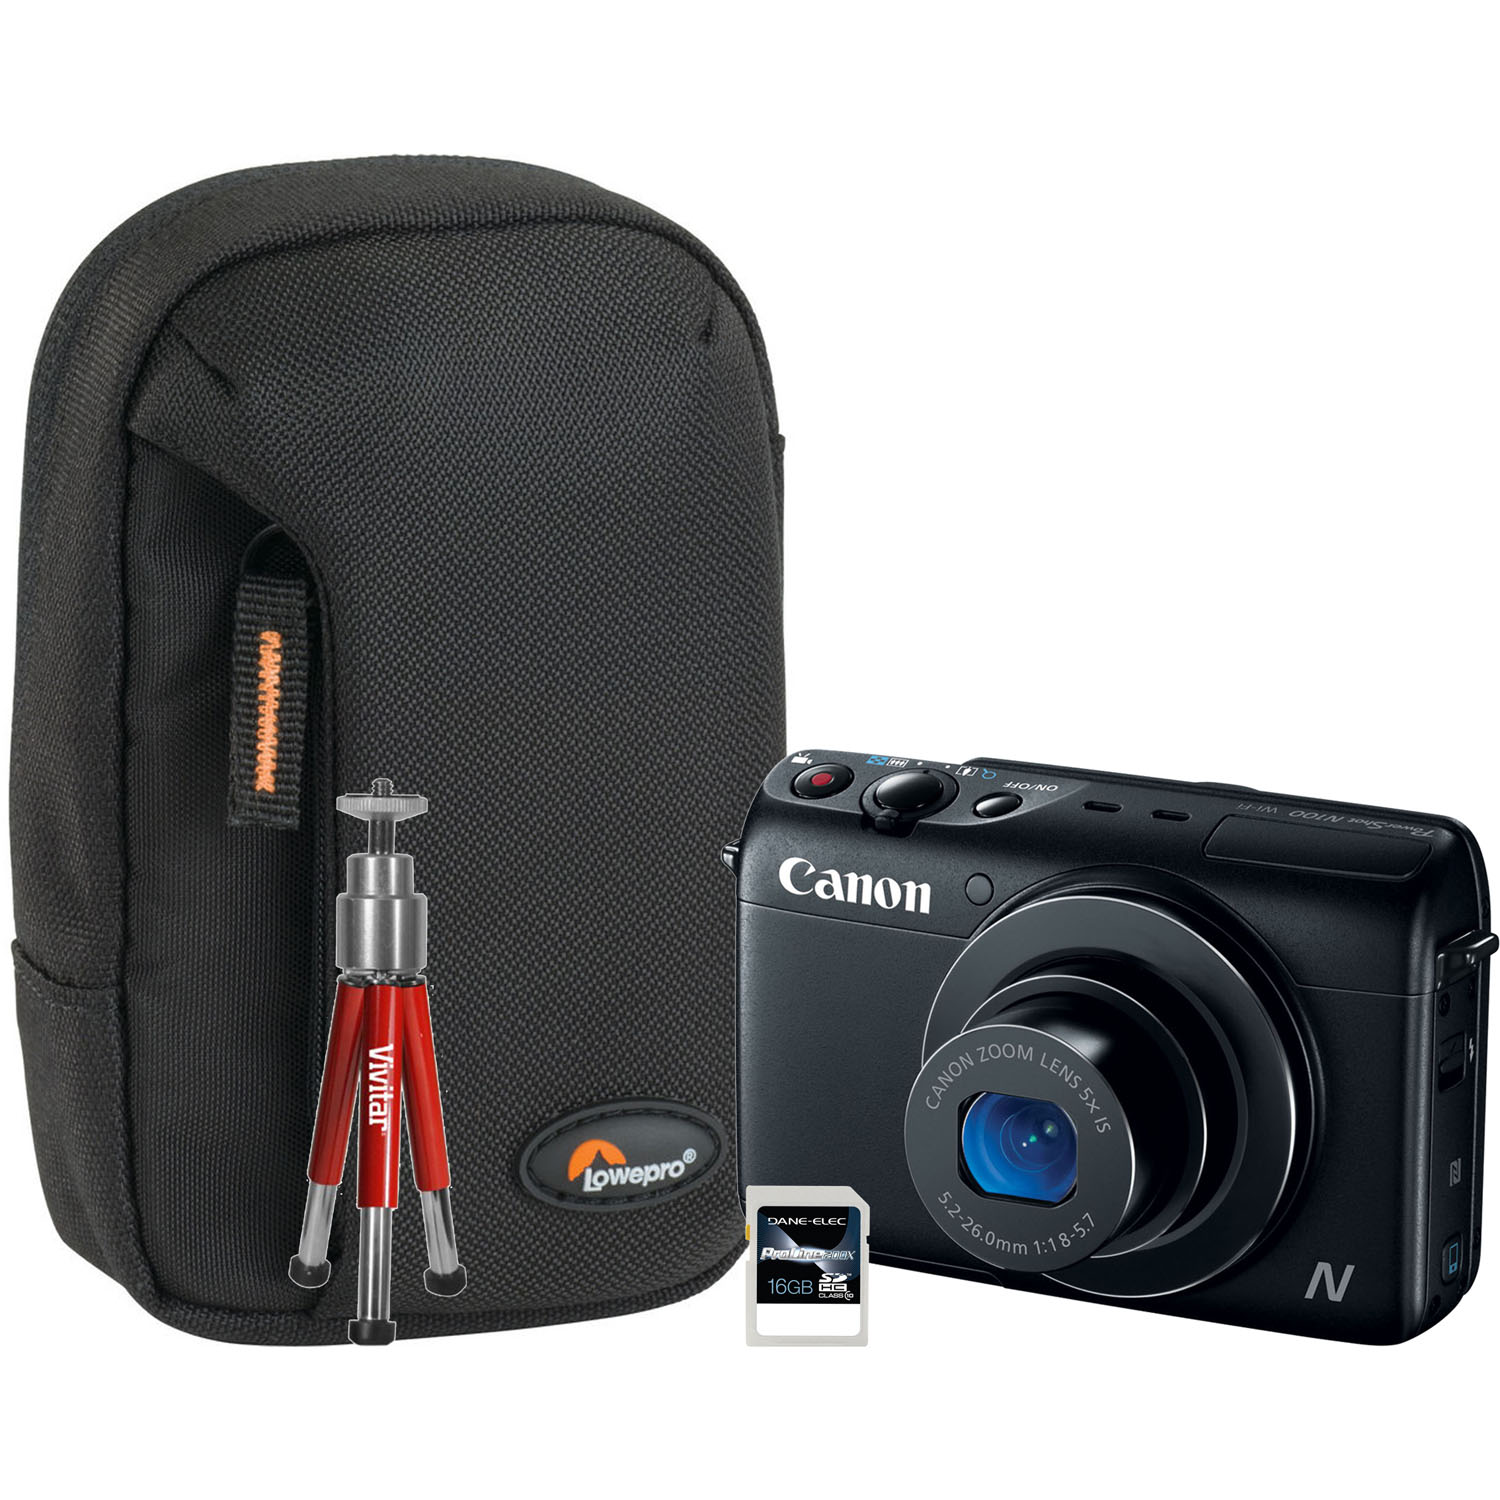 PowerShot N100 12.1MP Black Digital Camera, 16GB SDHC Card, Compact Camera Pouch and Red Mini Tripod